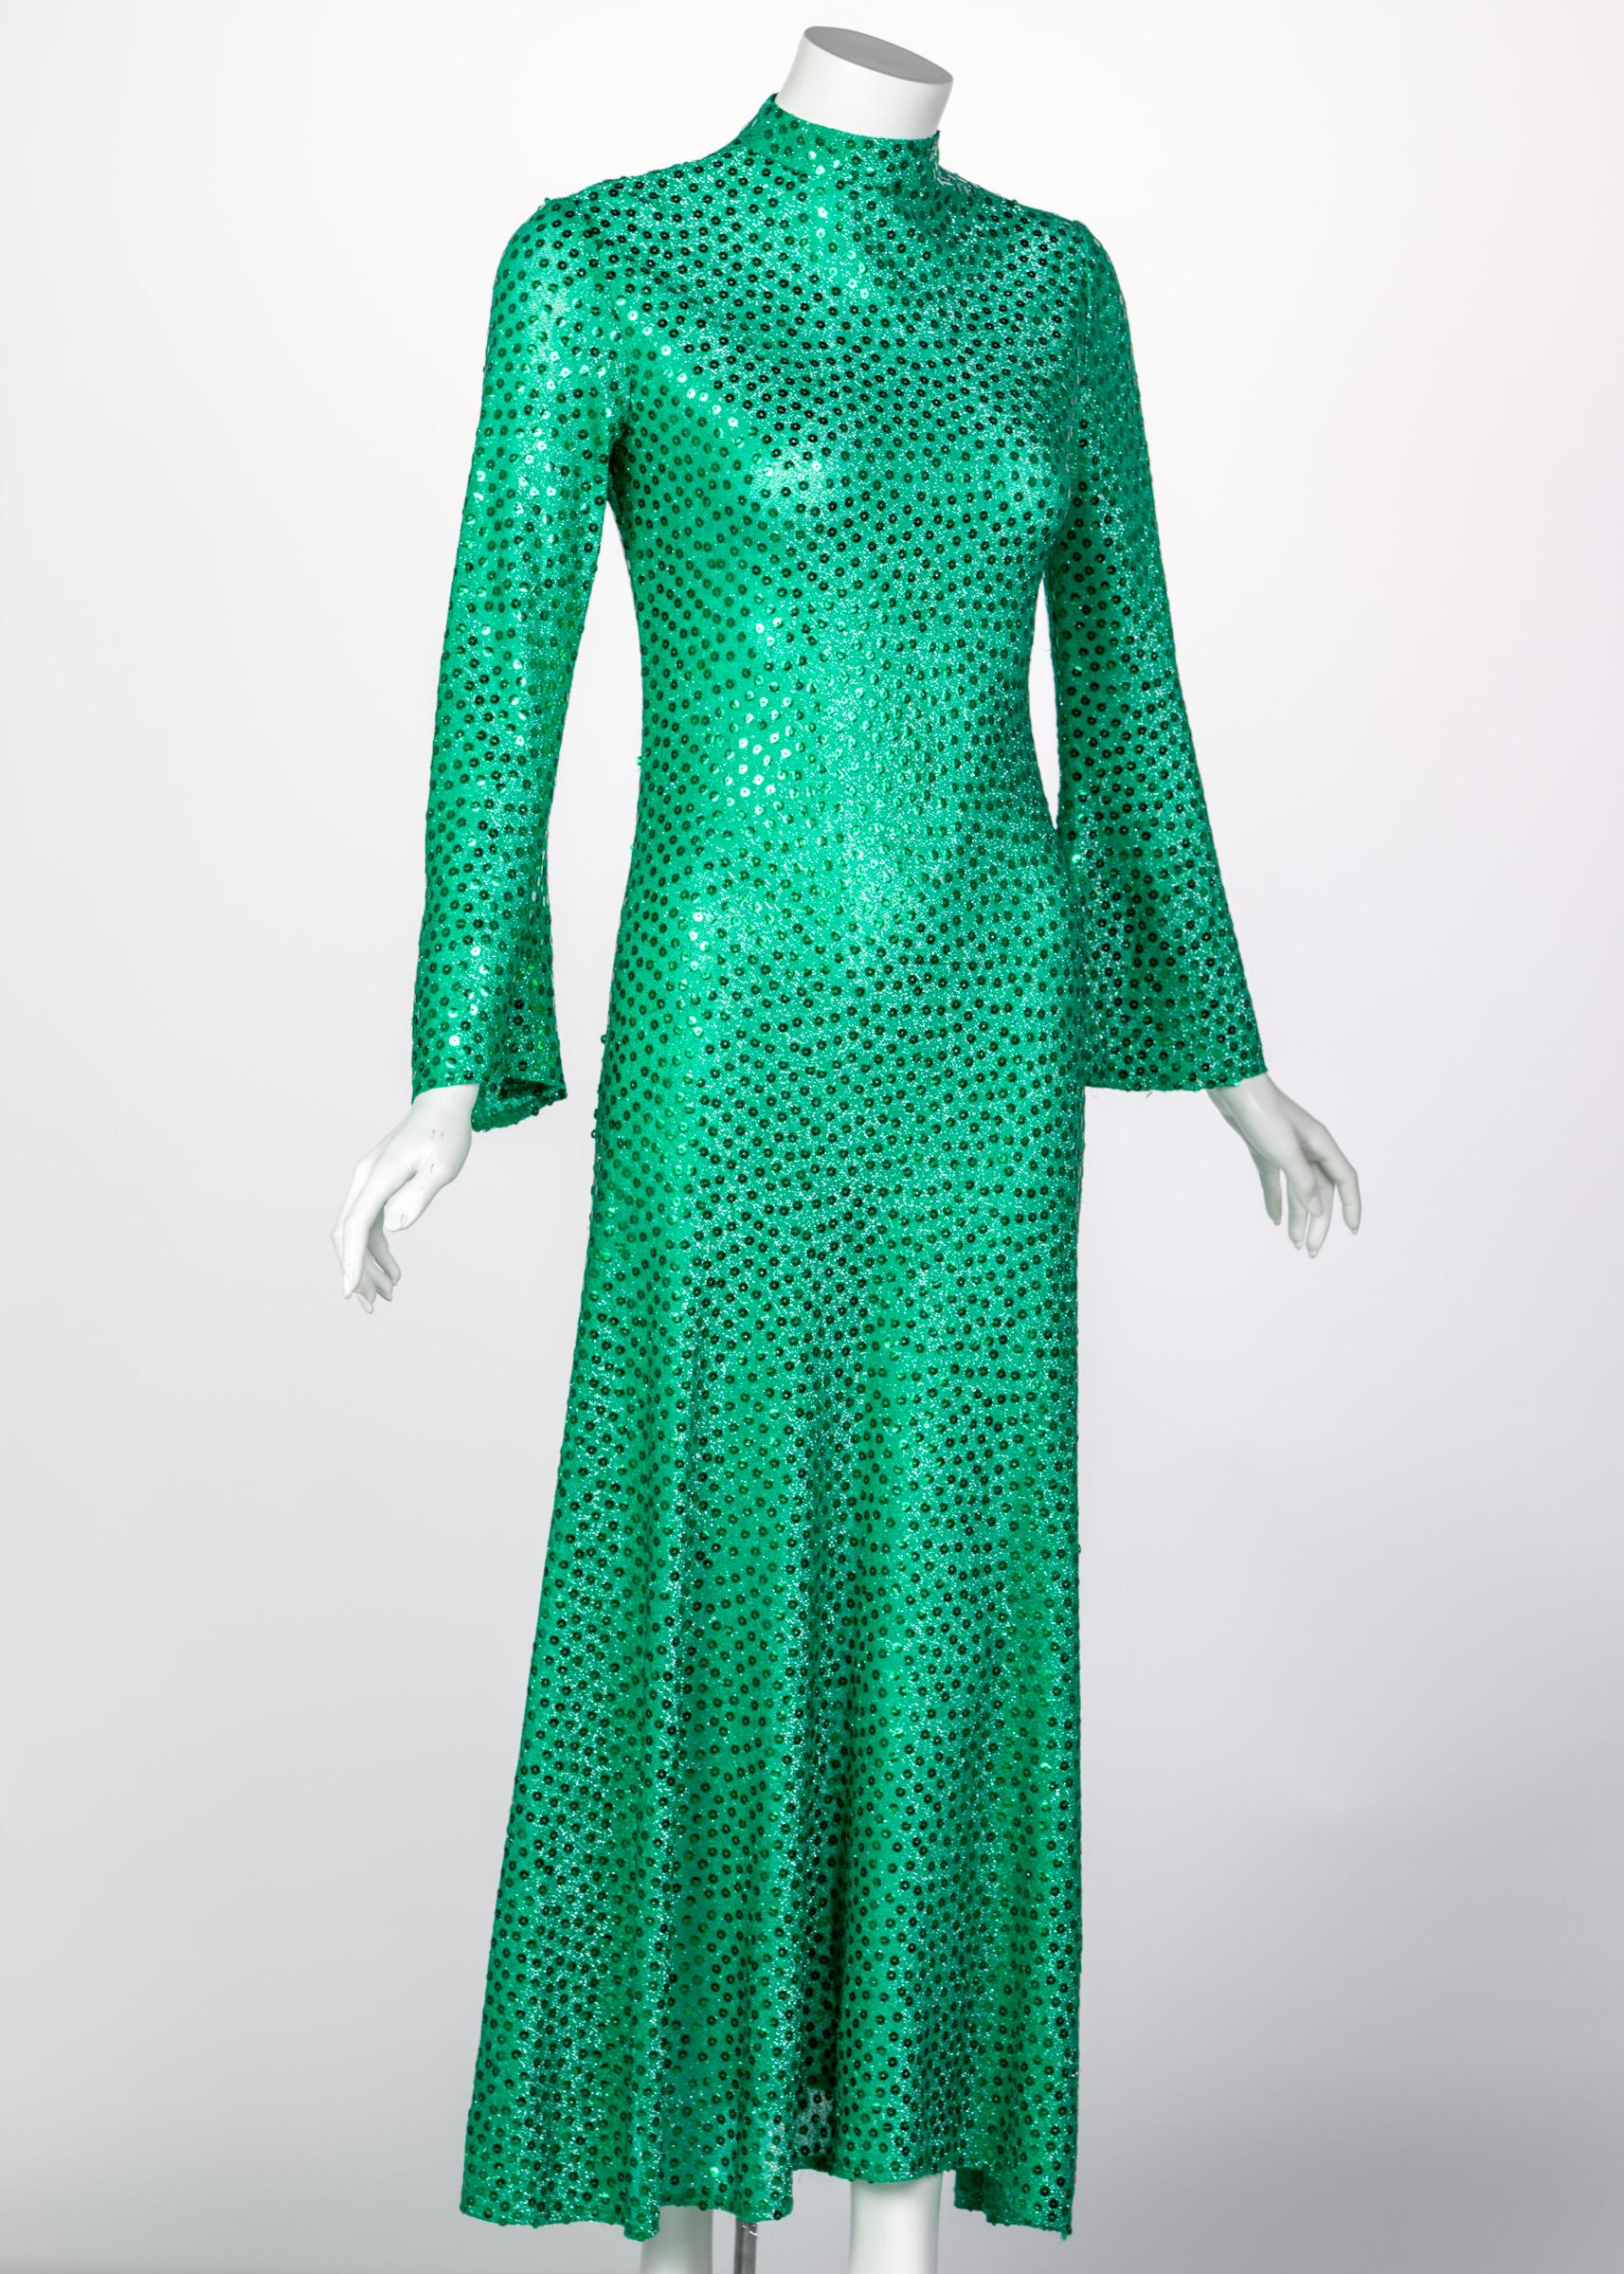 Vert Mollie Parnis - Robe à sequins vert émeraude à col bénitier, années 1960 en vente